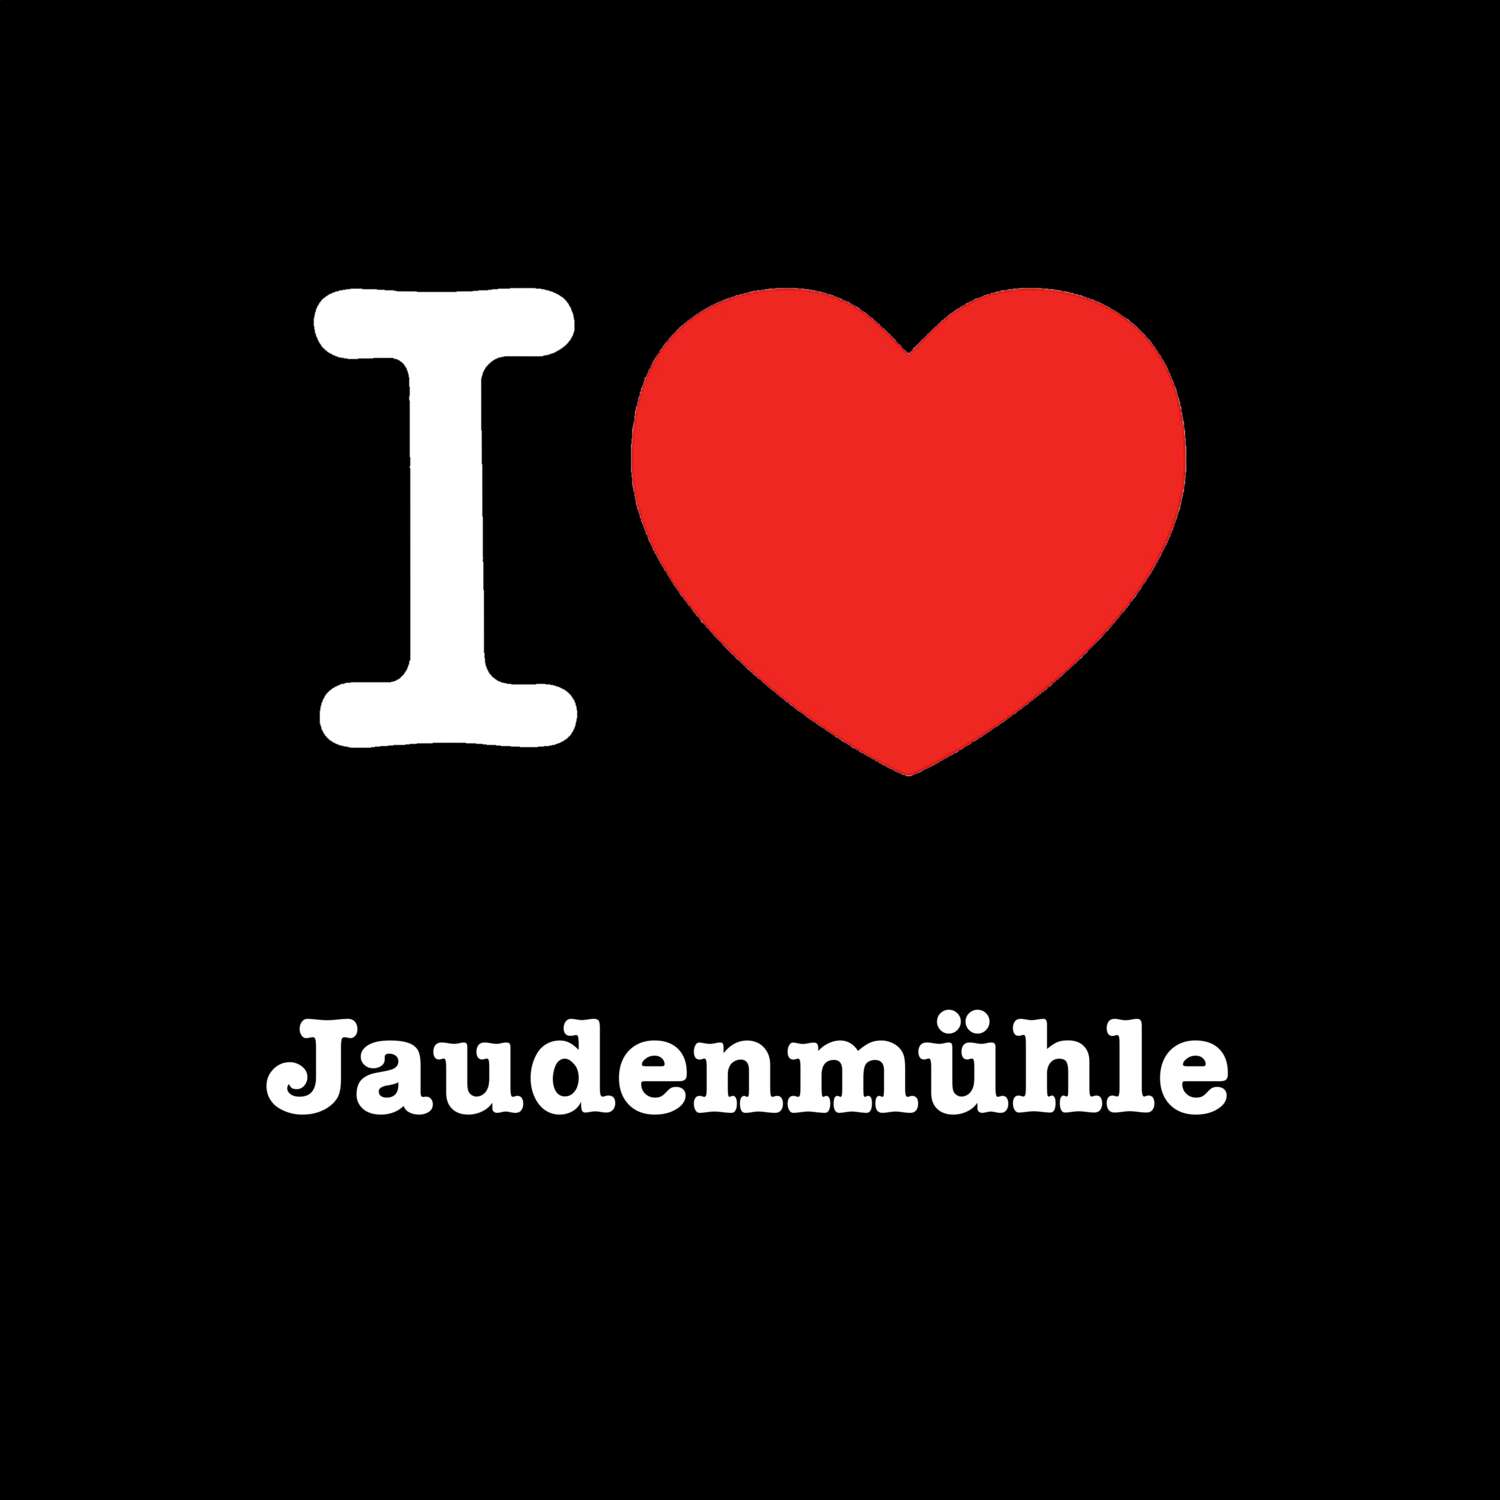 Jaudenmühle T-Shirt »I love«